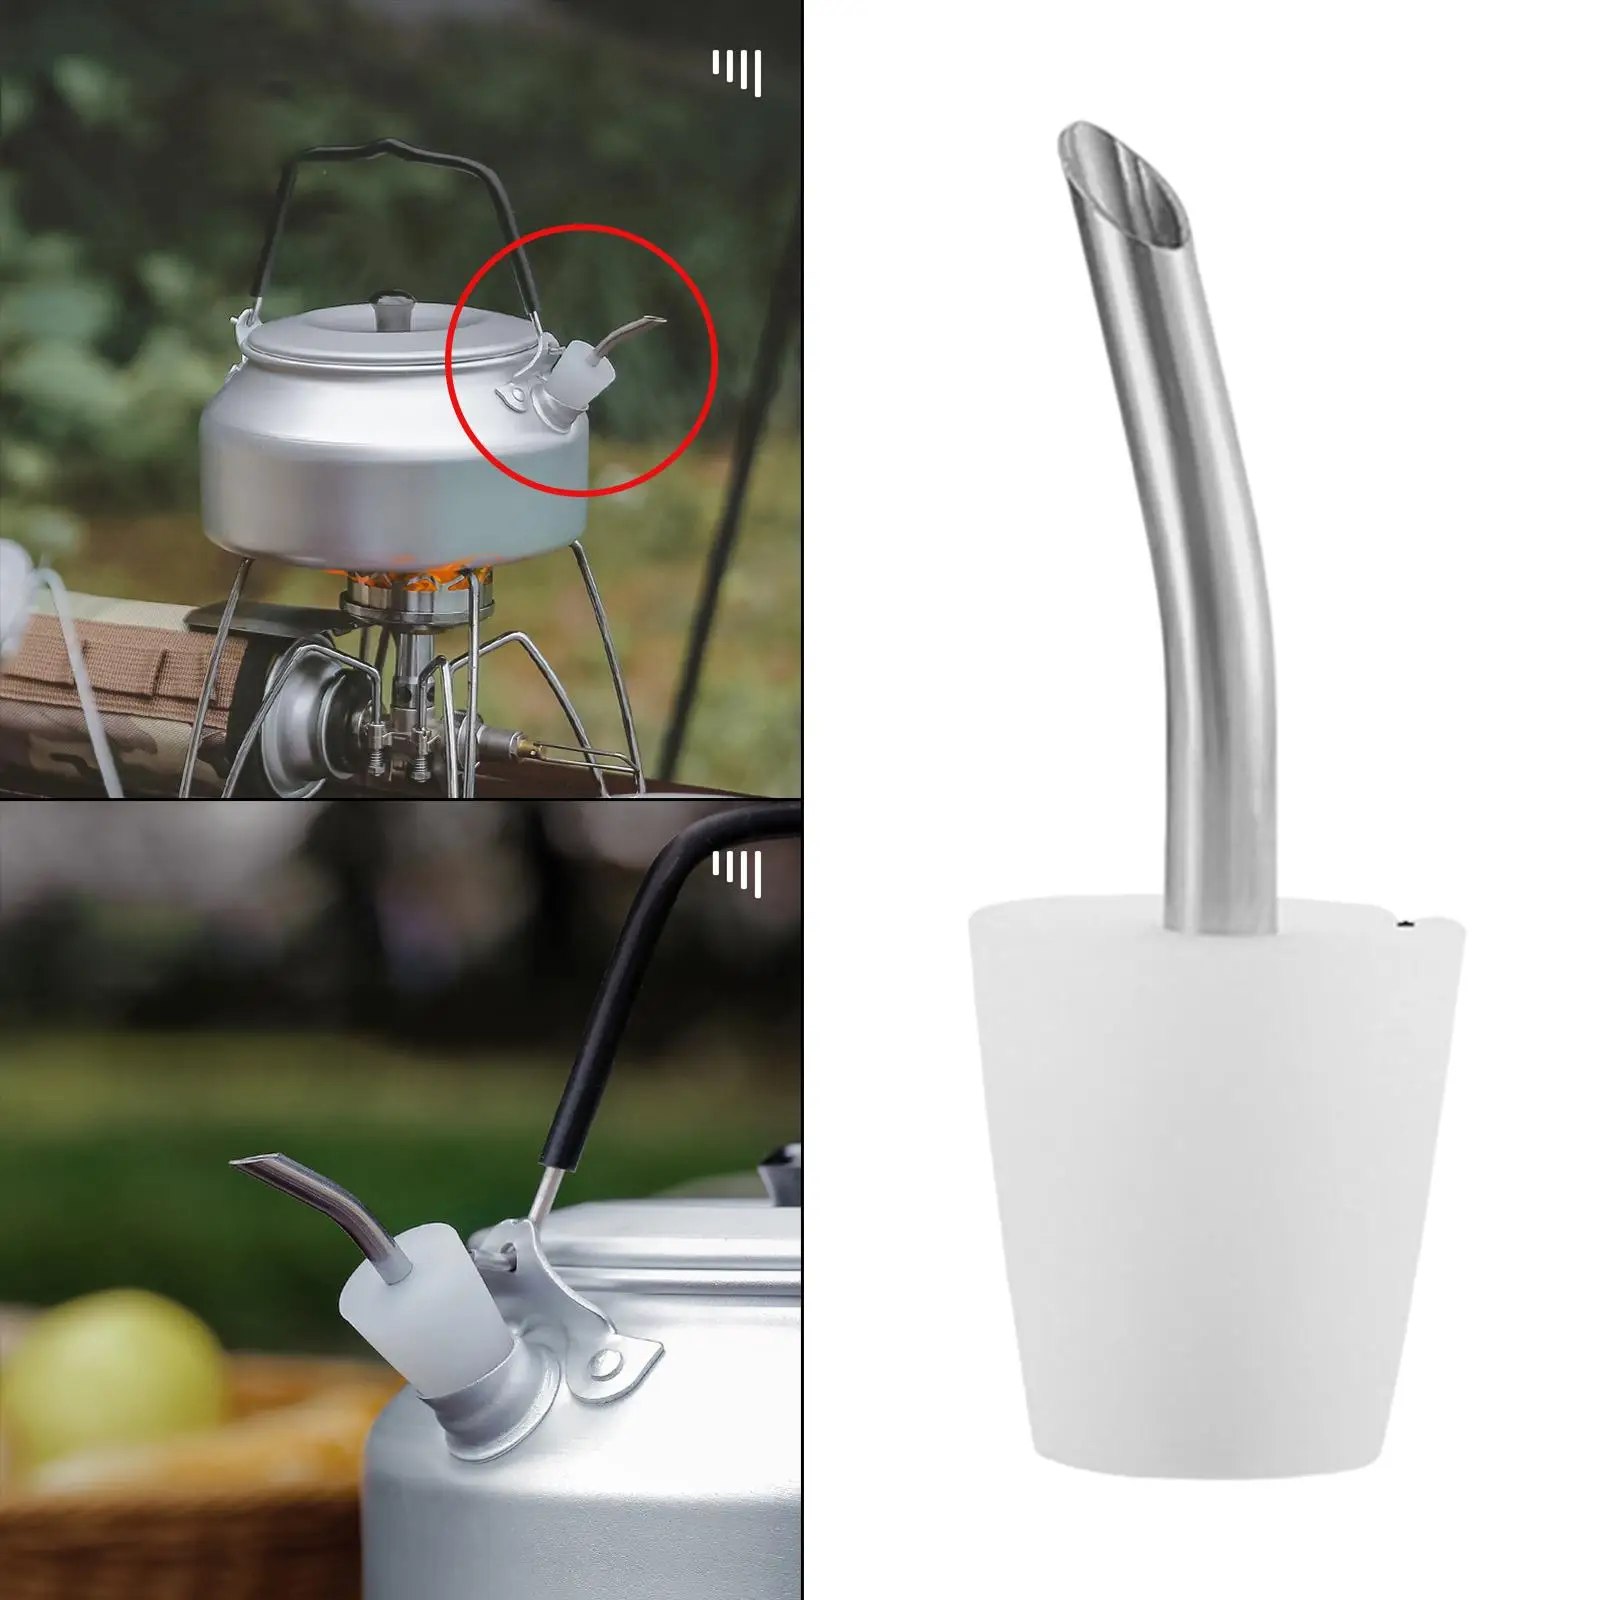 Portable Outdoor Kettle Spout Convert Faucet Replacement Accessories Conversion Water Nozzle Teapot Mouths for Camping Travel